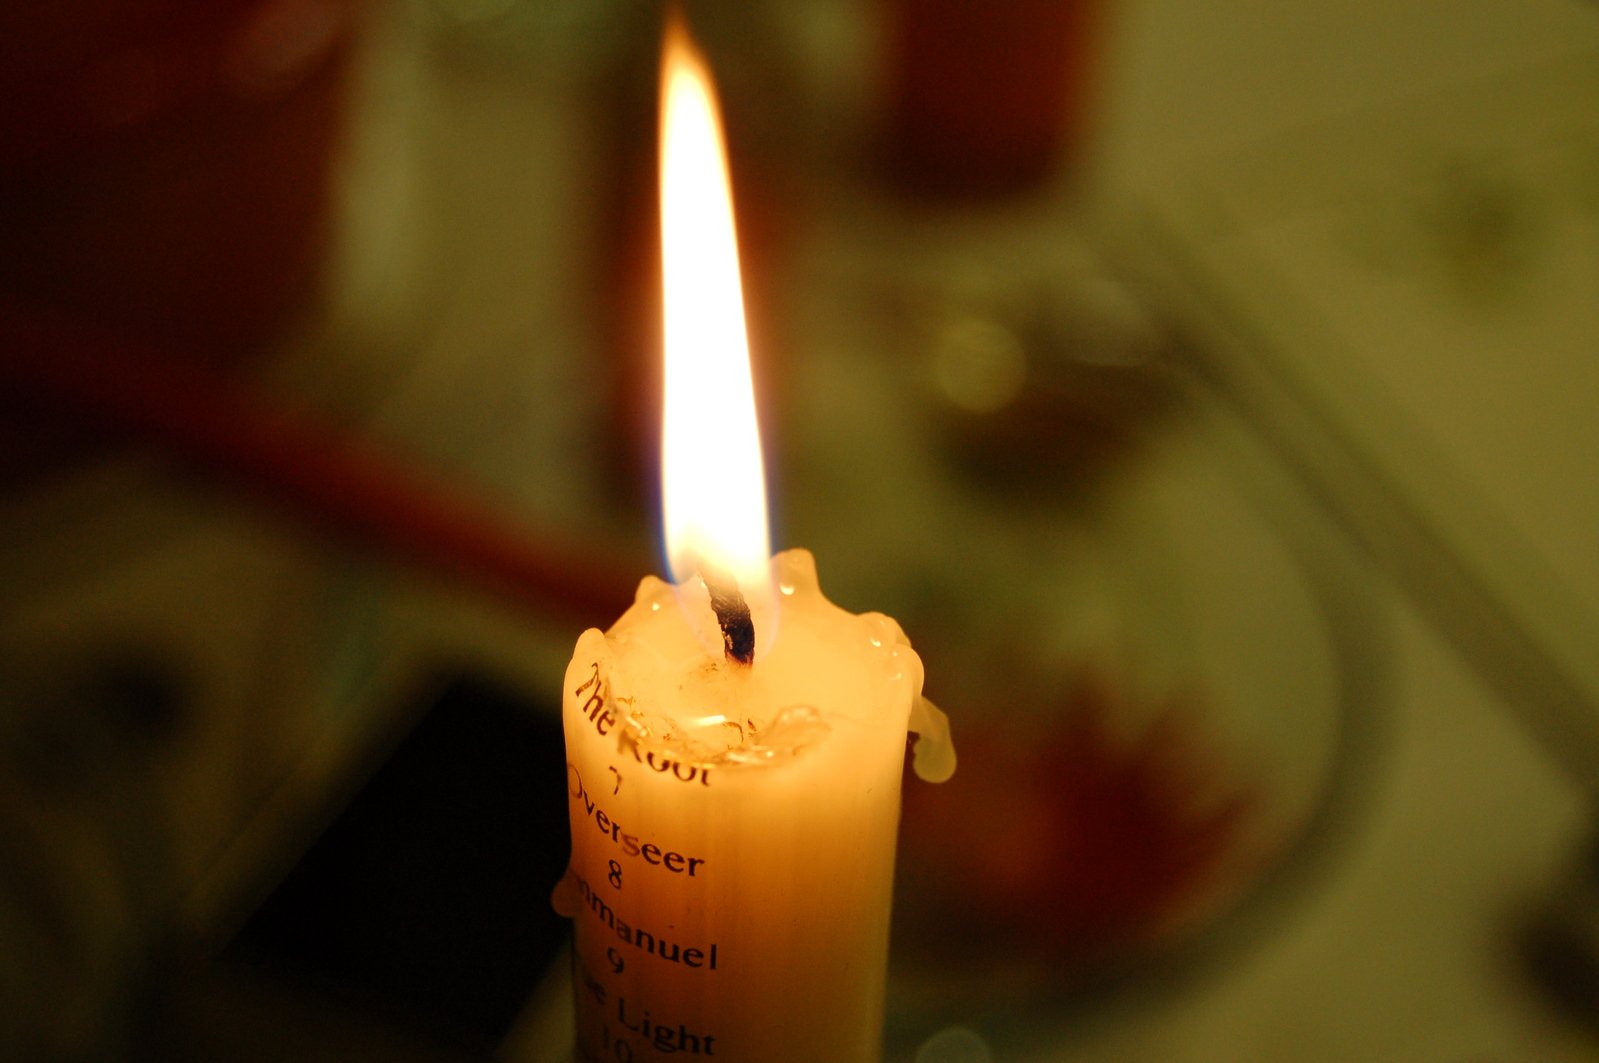 an orange candle has a poem written on it